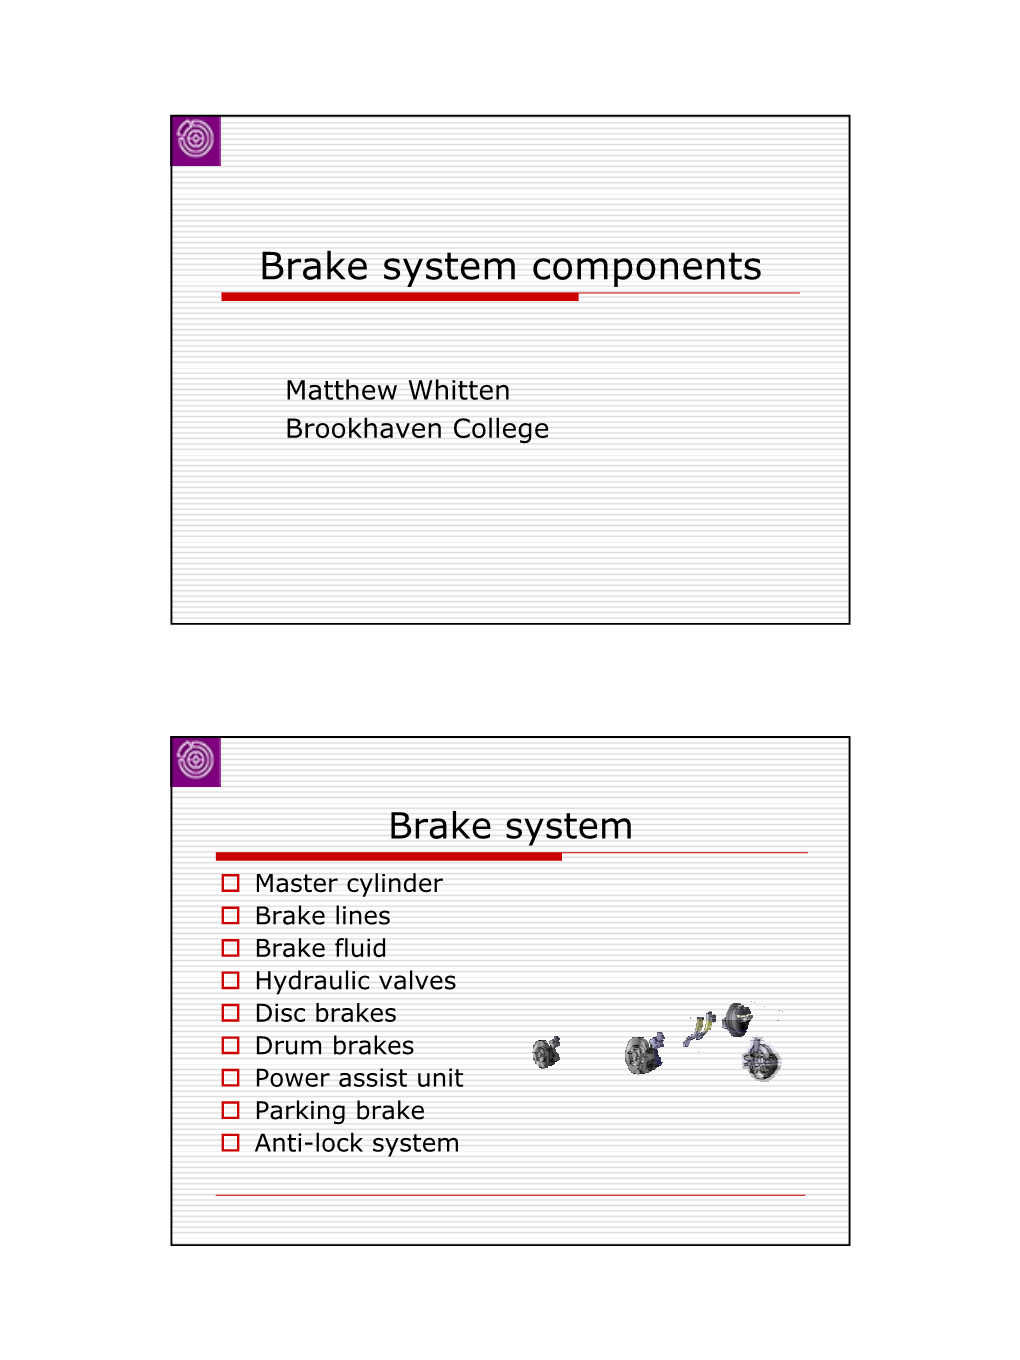 Brake System Components